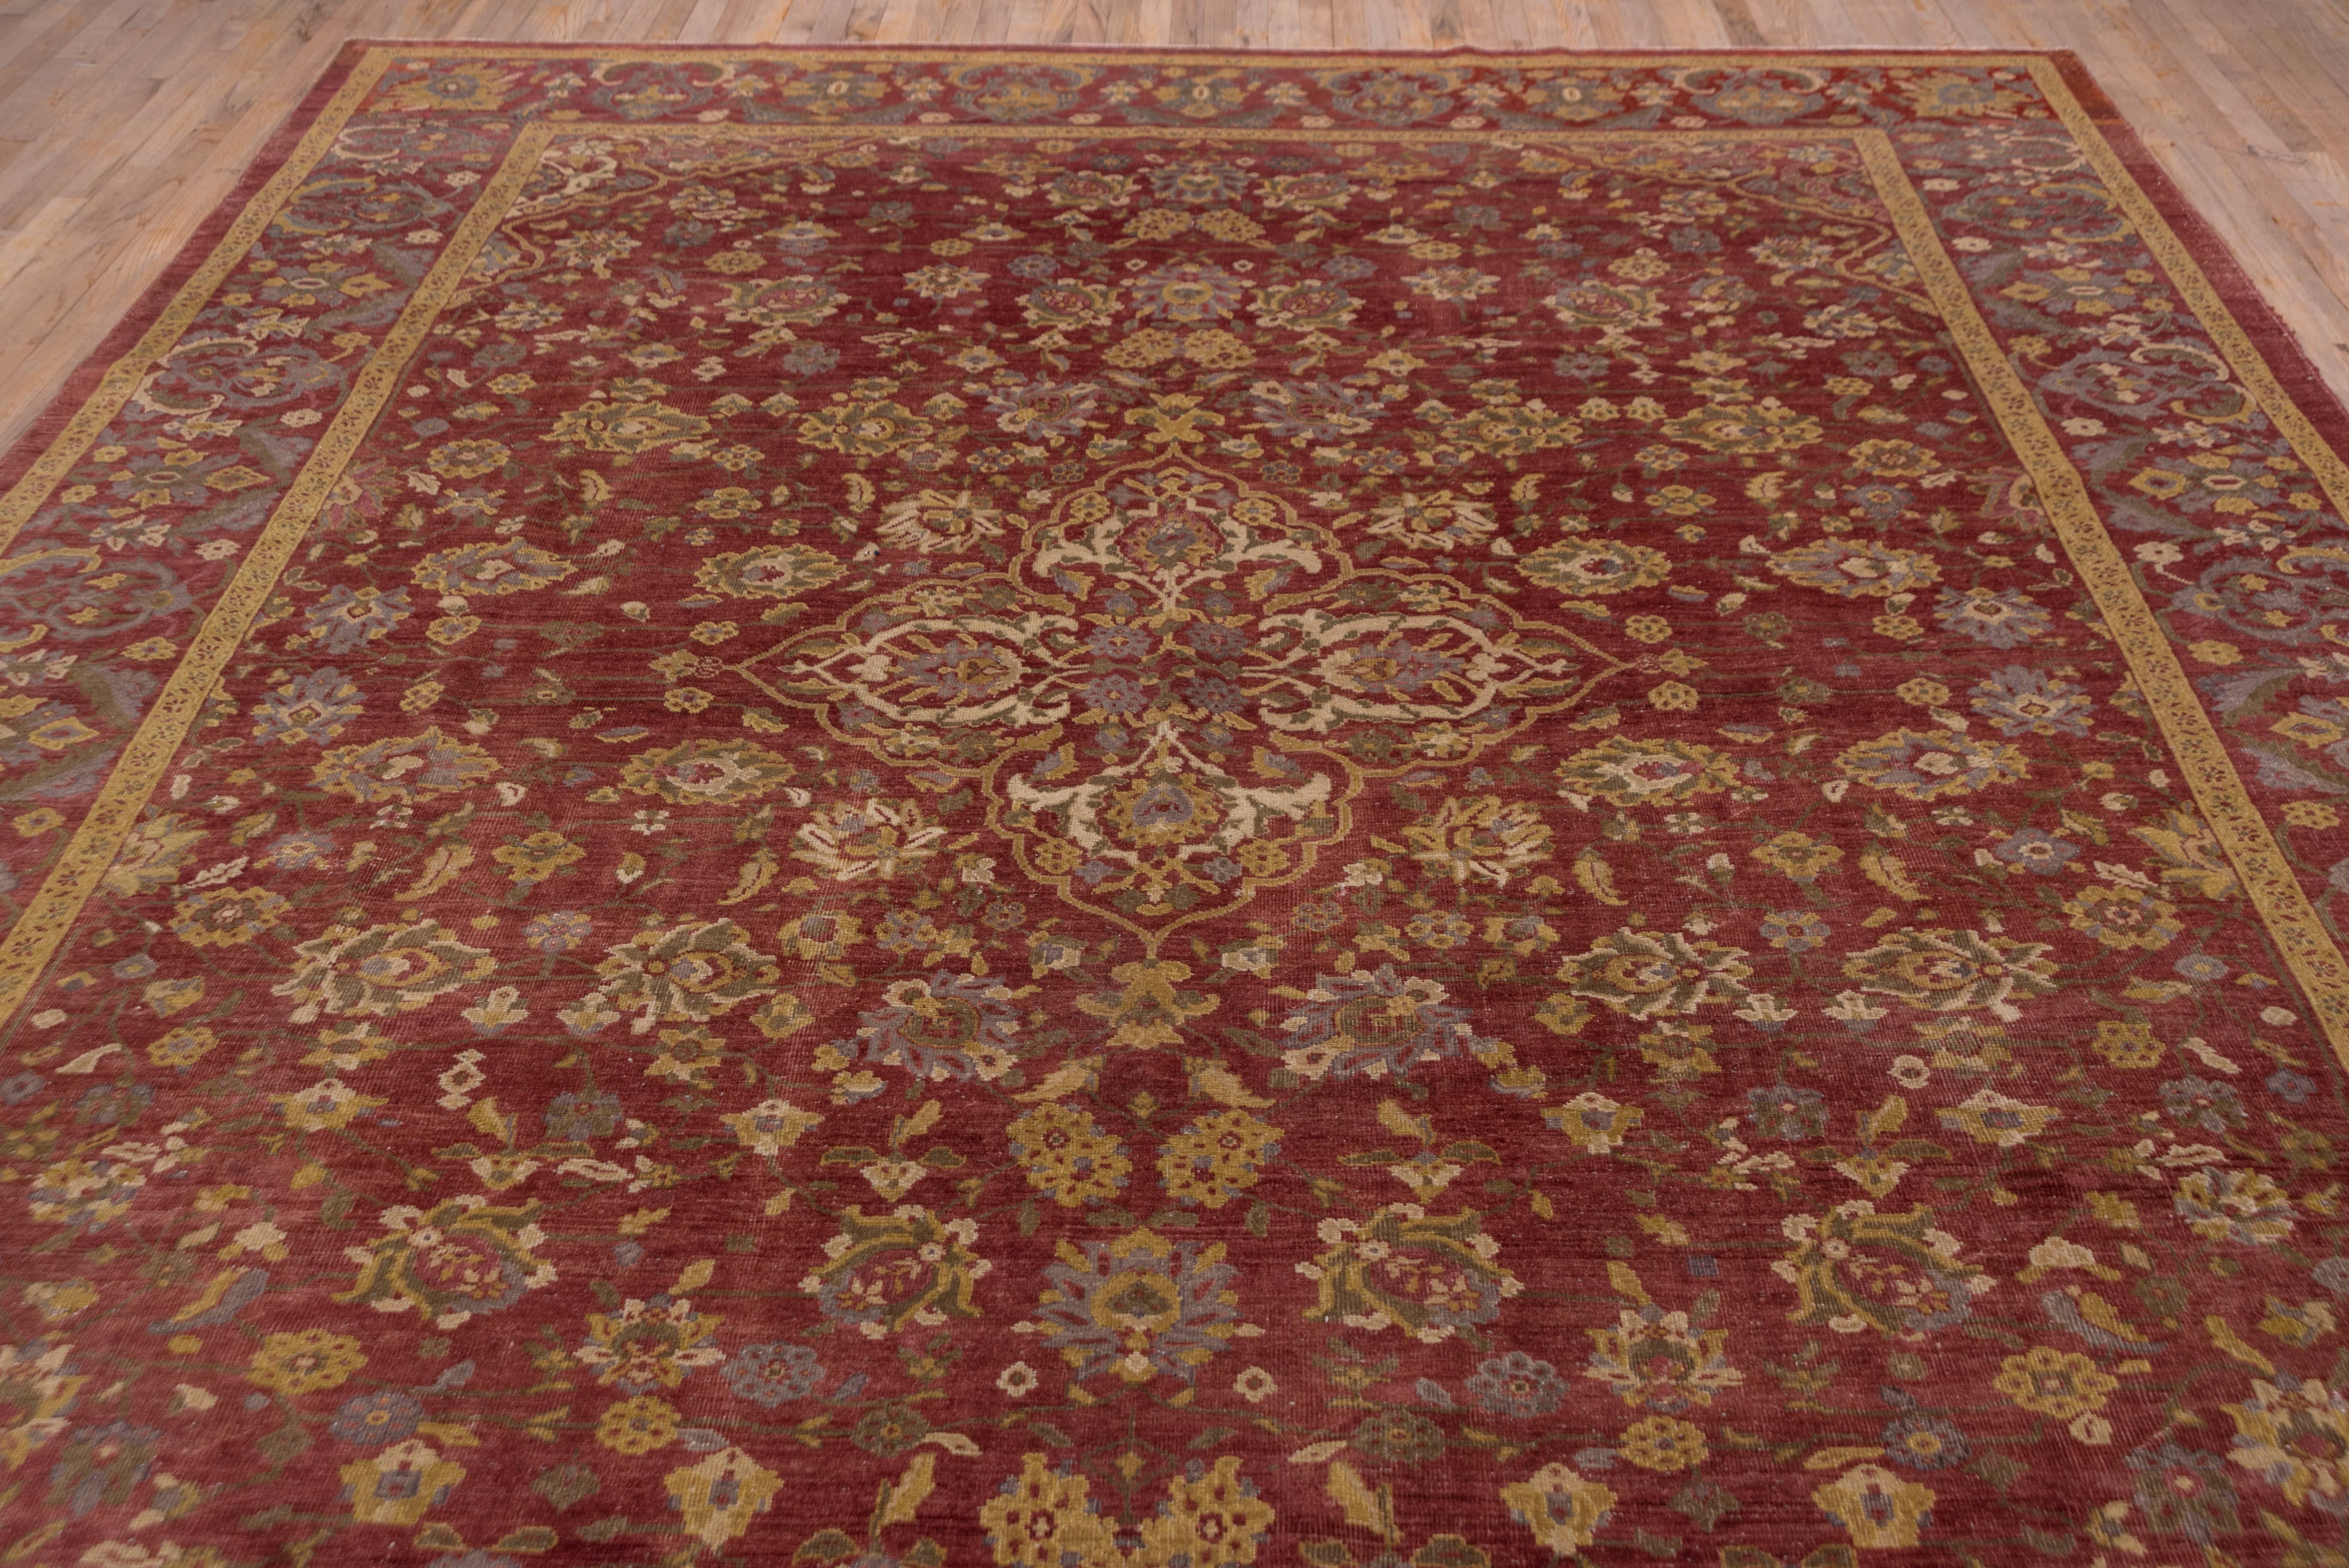 Tribal Antique Mahal Carpet, Circa 1920s, Red Field